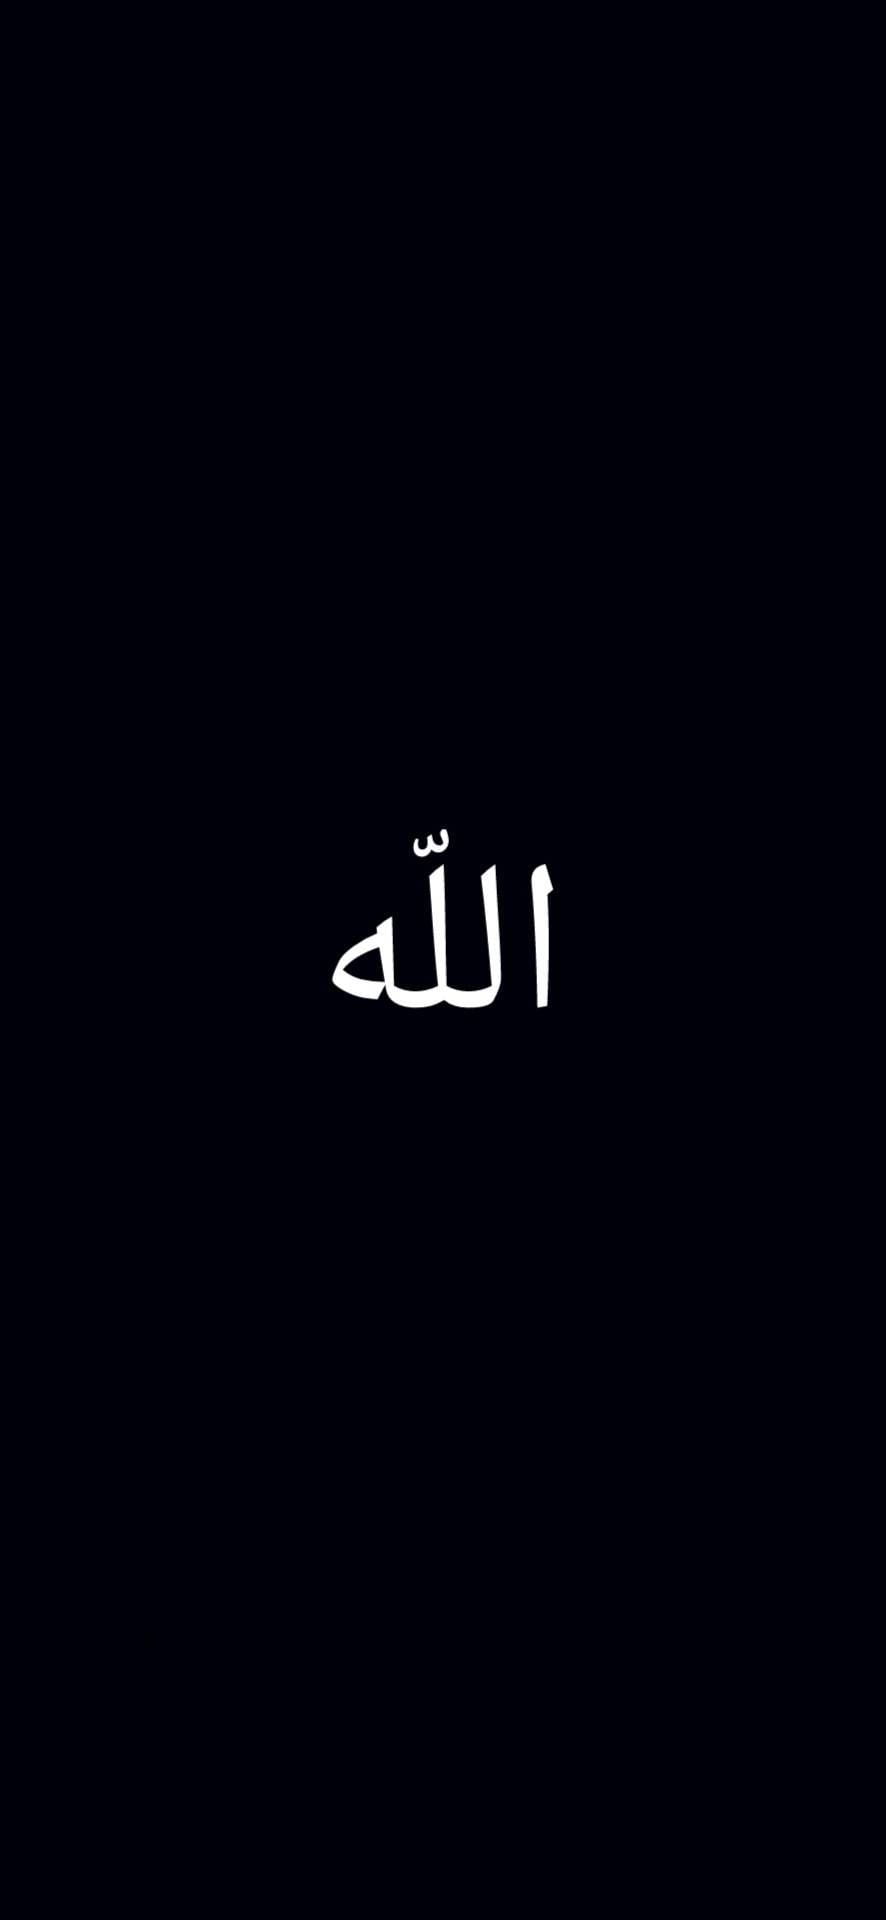 Allah Name Wallpaper Black